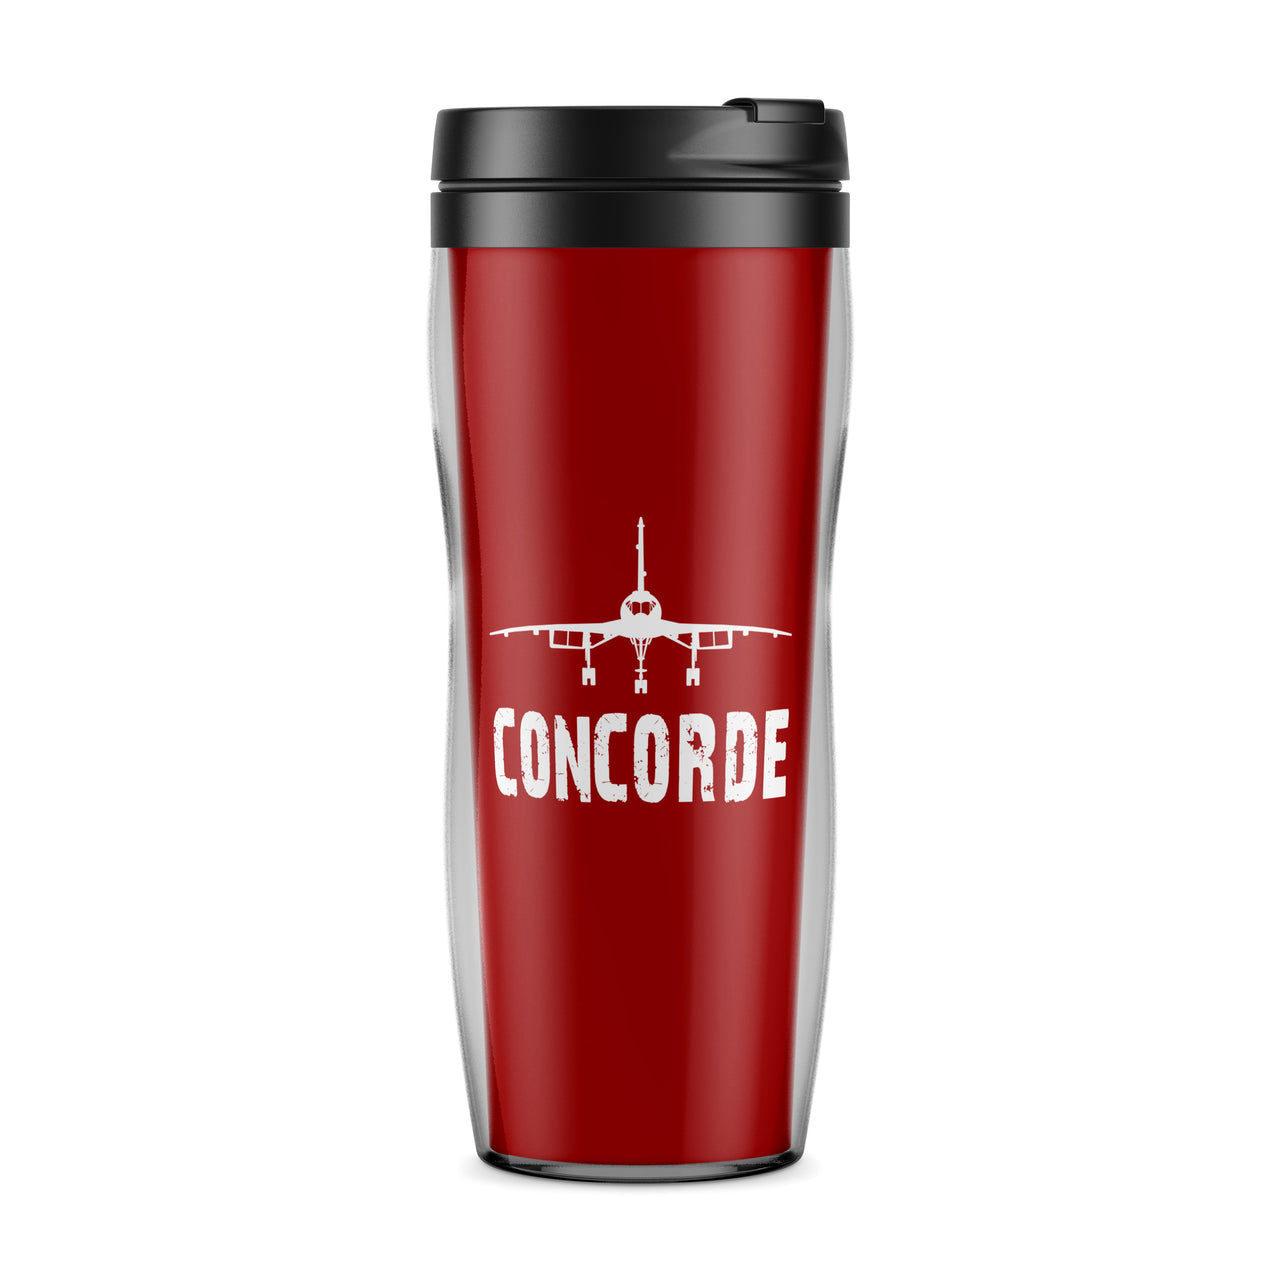 Concorde & Plane Designed Travel Mugs